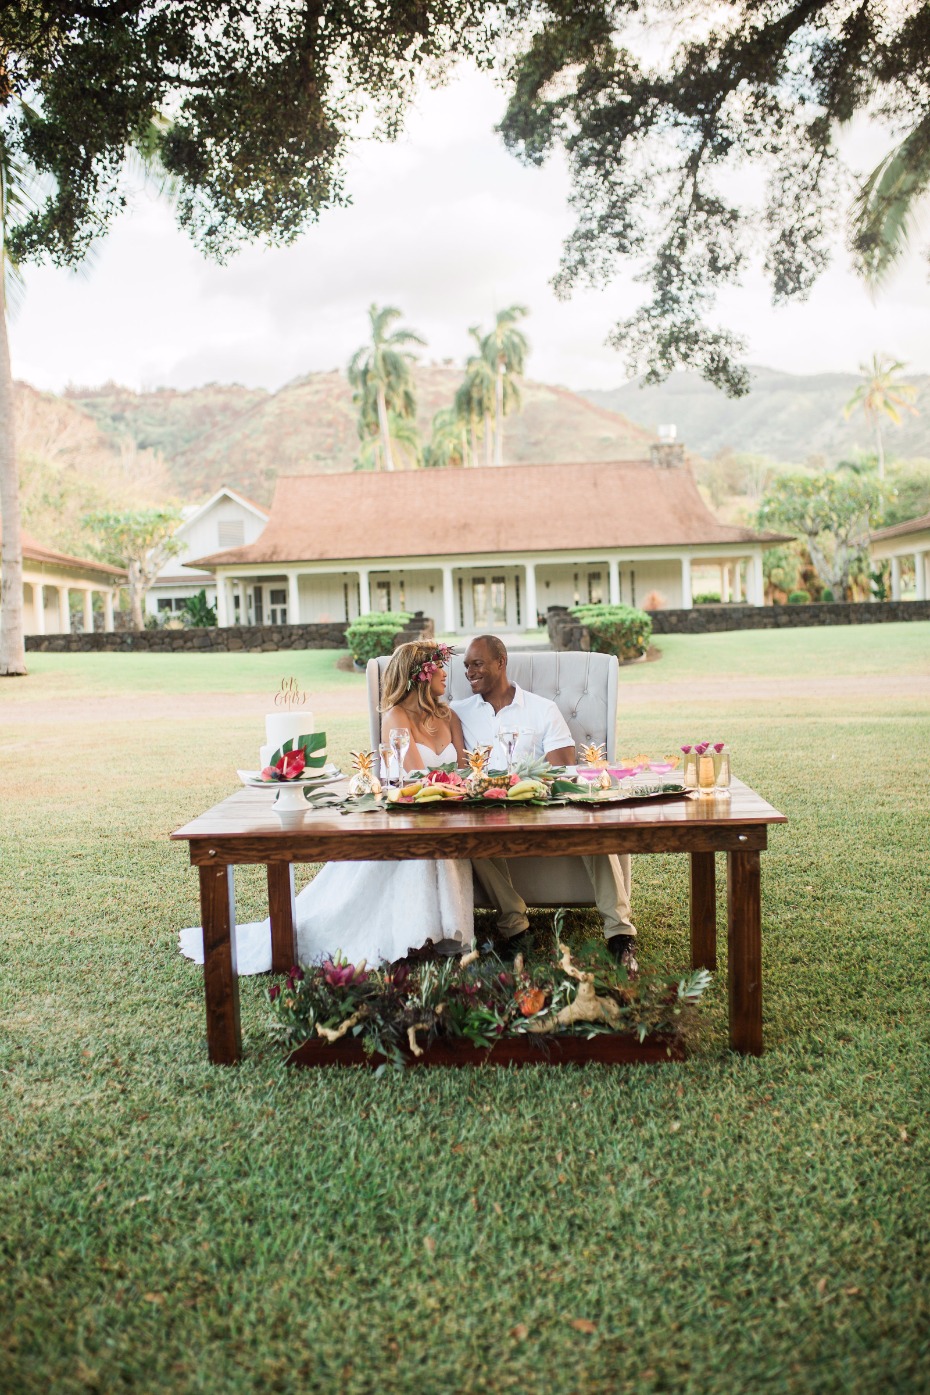 Dillingham Ranch wedding venue in Hawaii